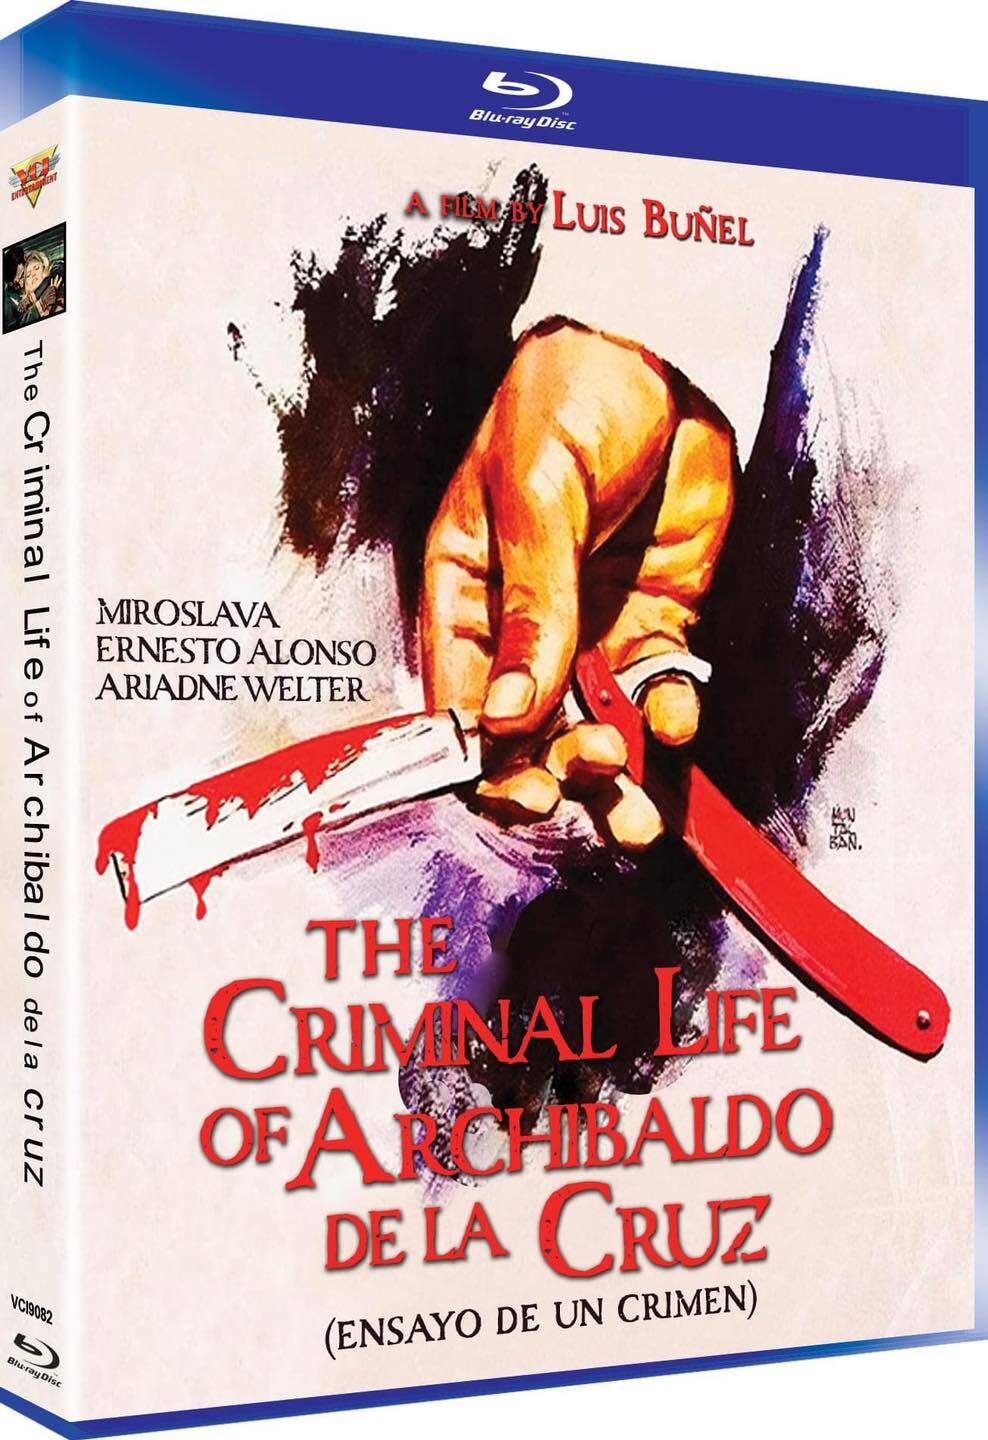 The Criminal Life of Archibaldo de la Cruz (1955) de Luis Buñuel - front cover